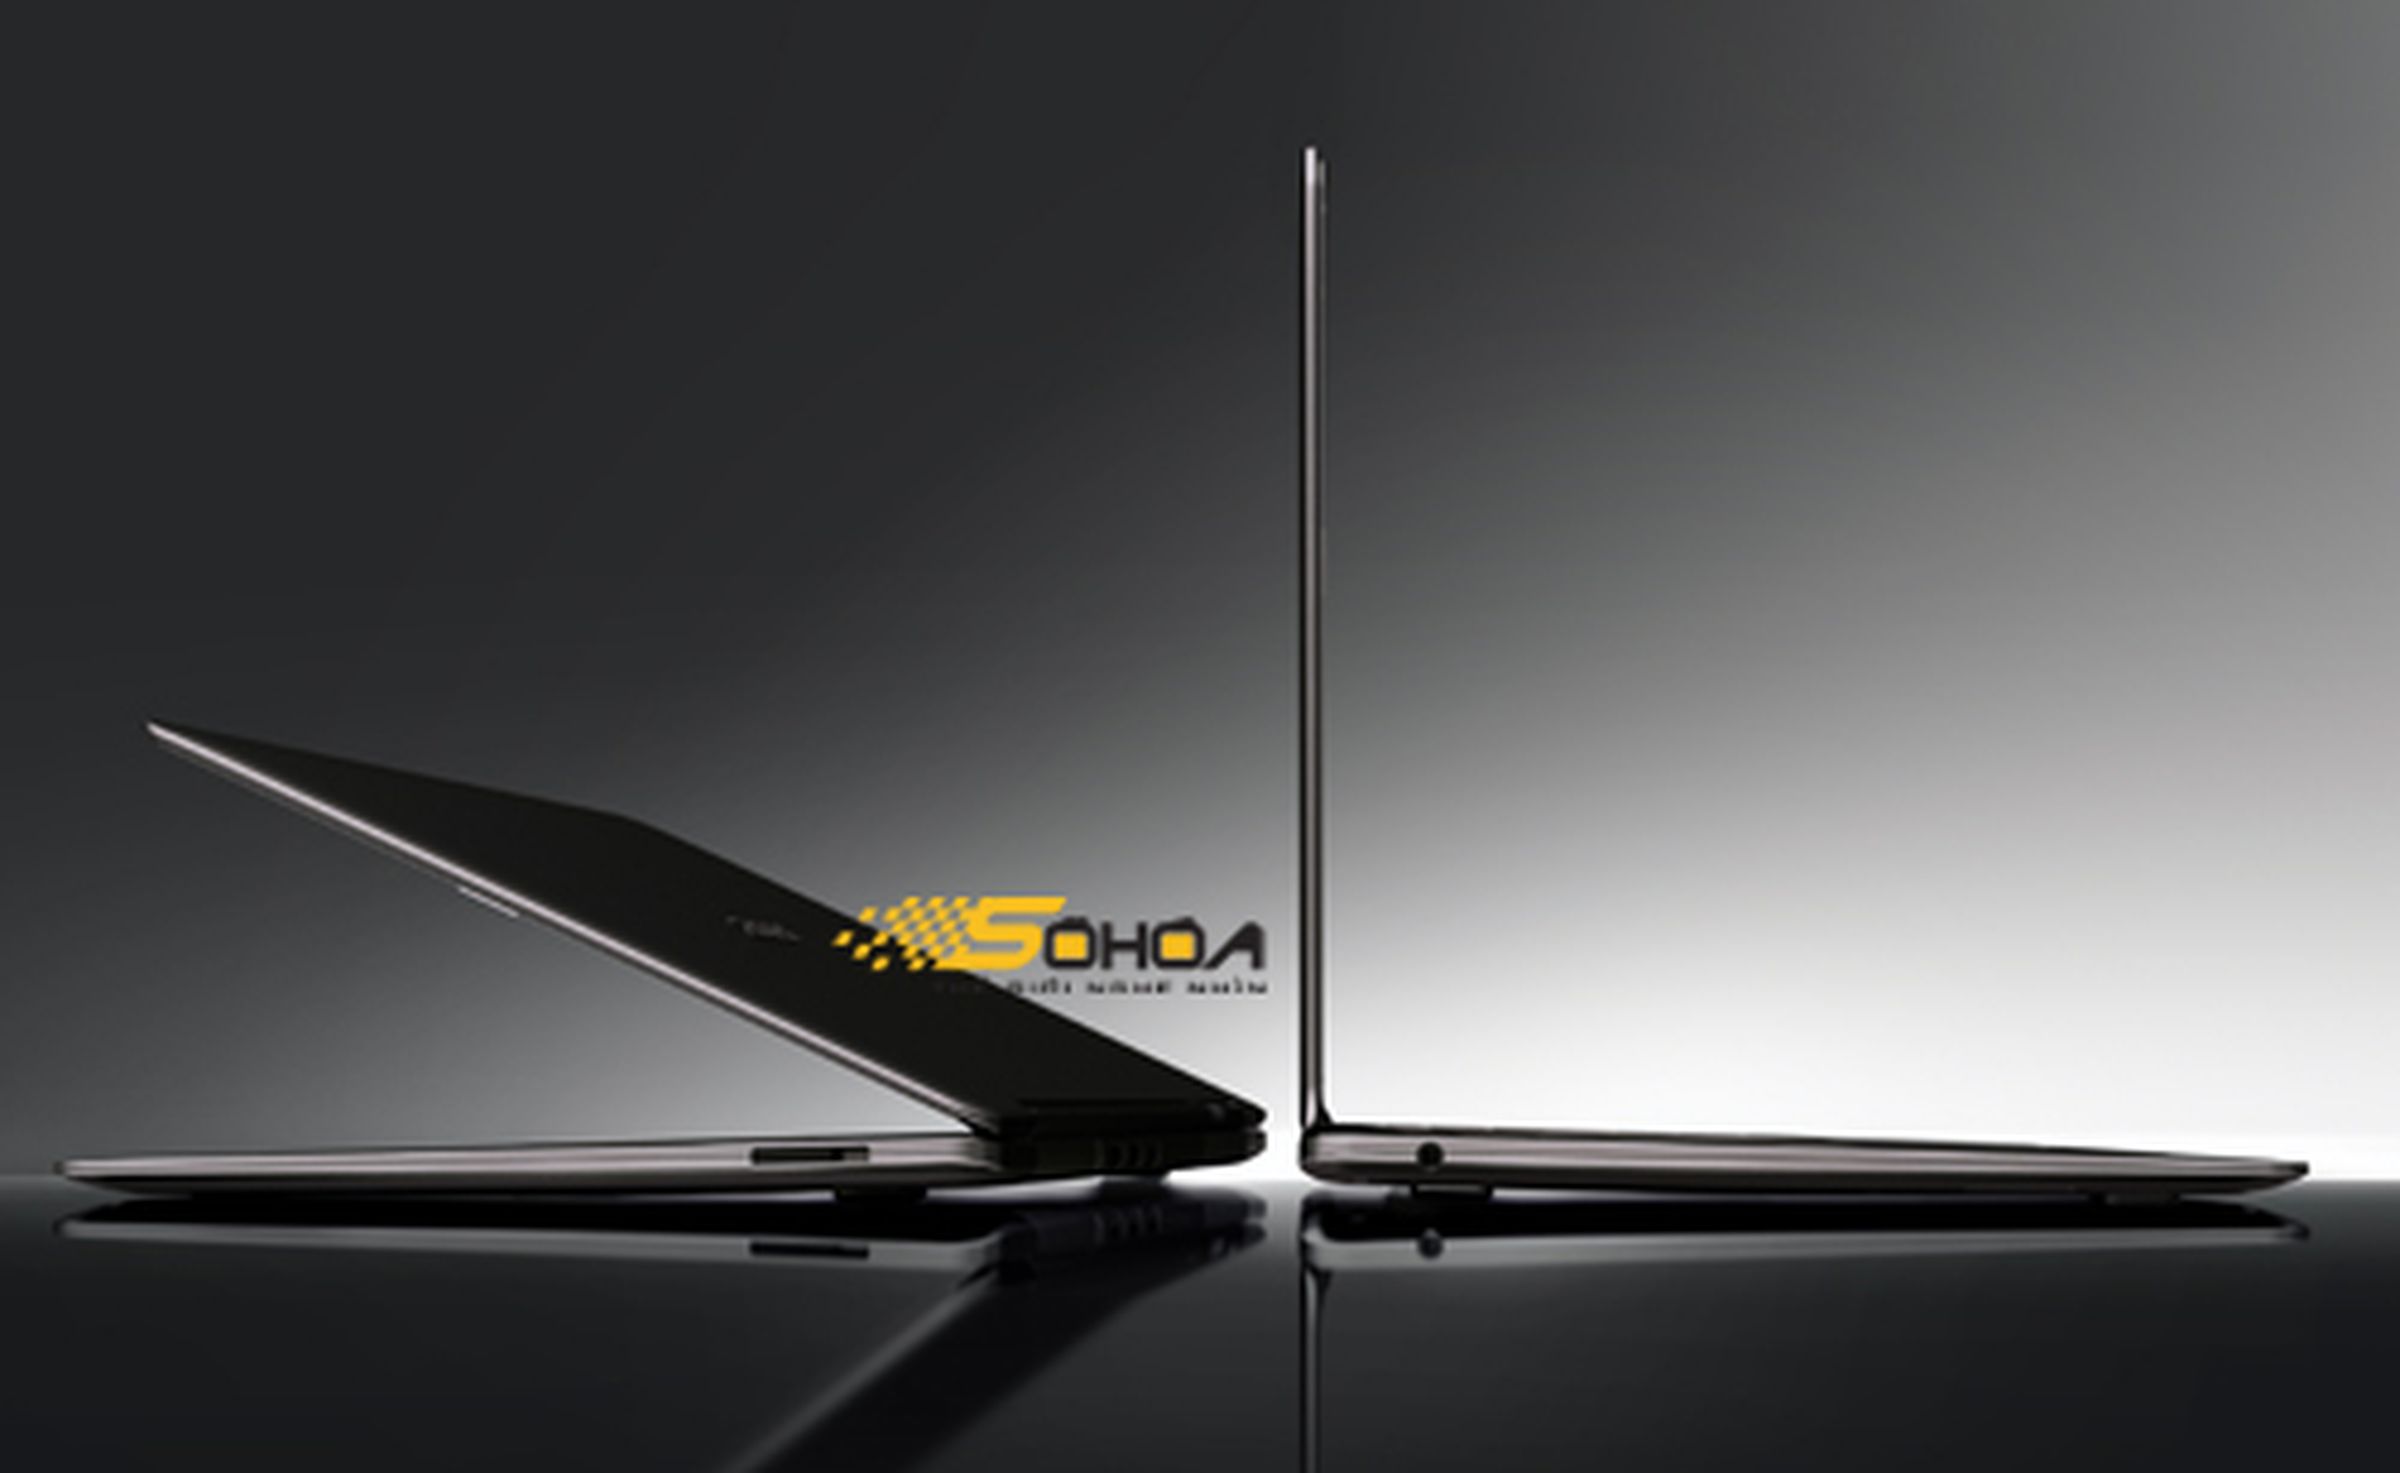 Acer prepping Aspire 3951 ultrabook